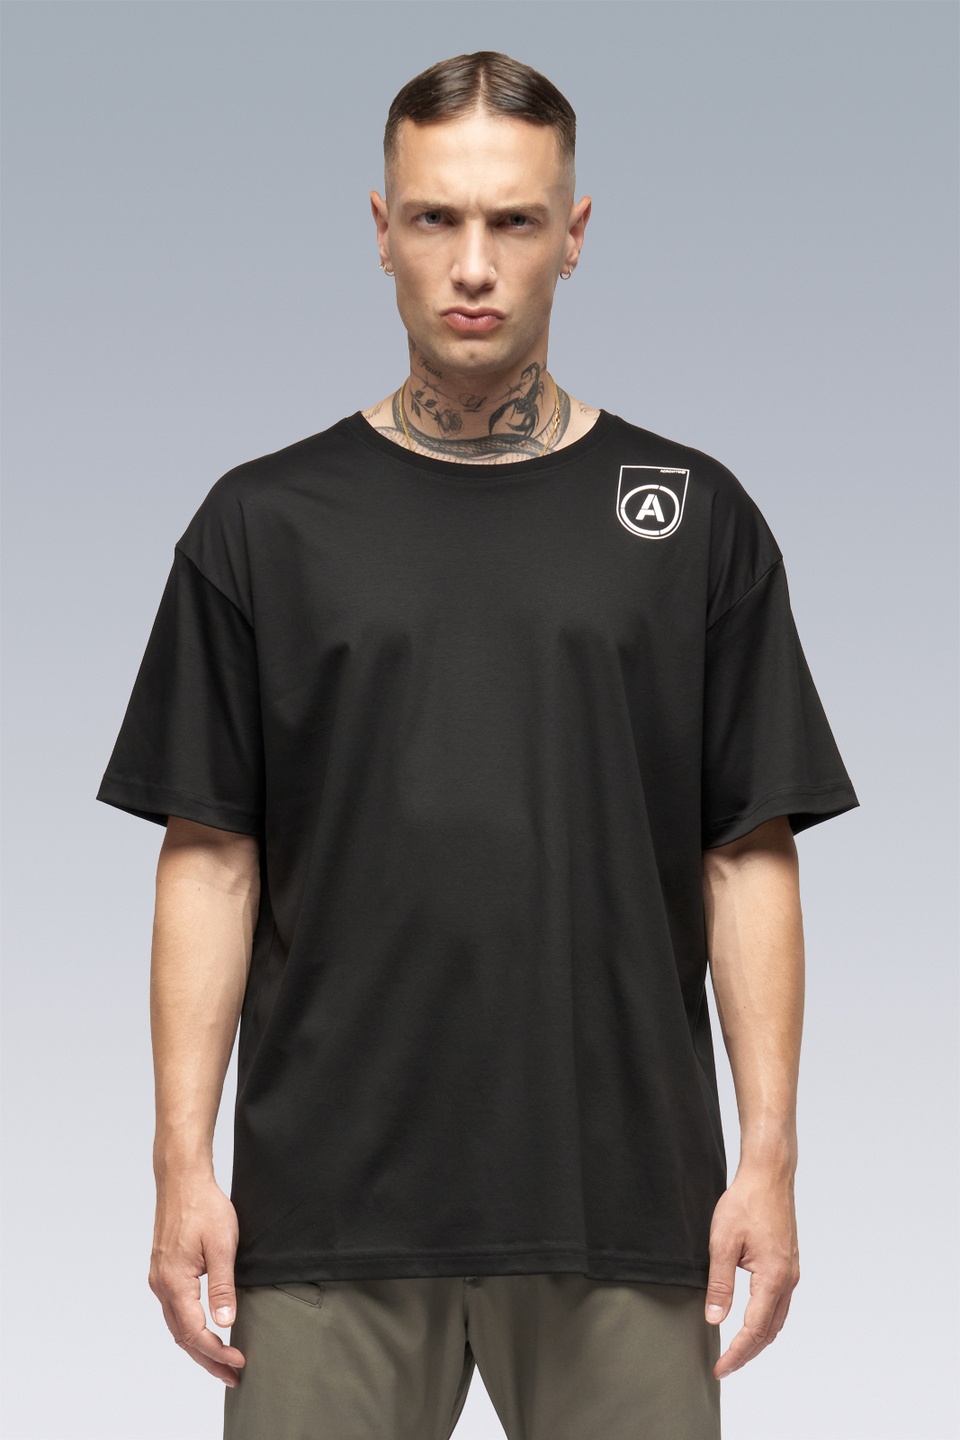 S24-PR-B 100% Cotton Mercerized Short Sleeve T-shirt Black - 1